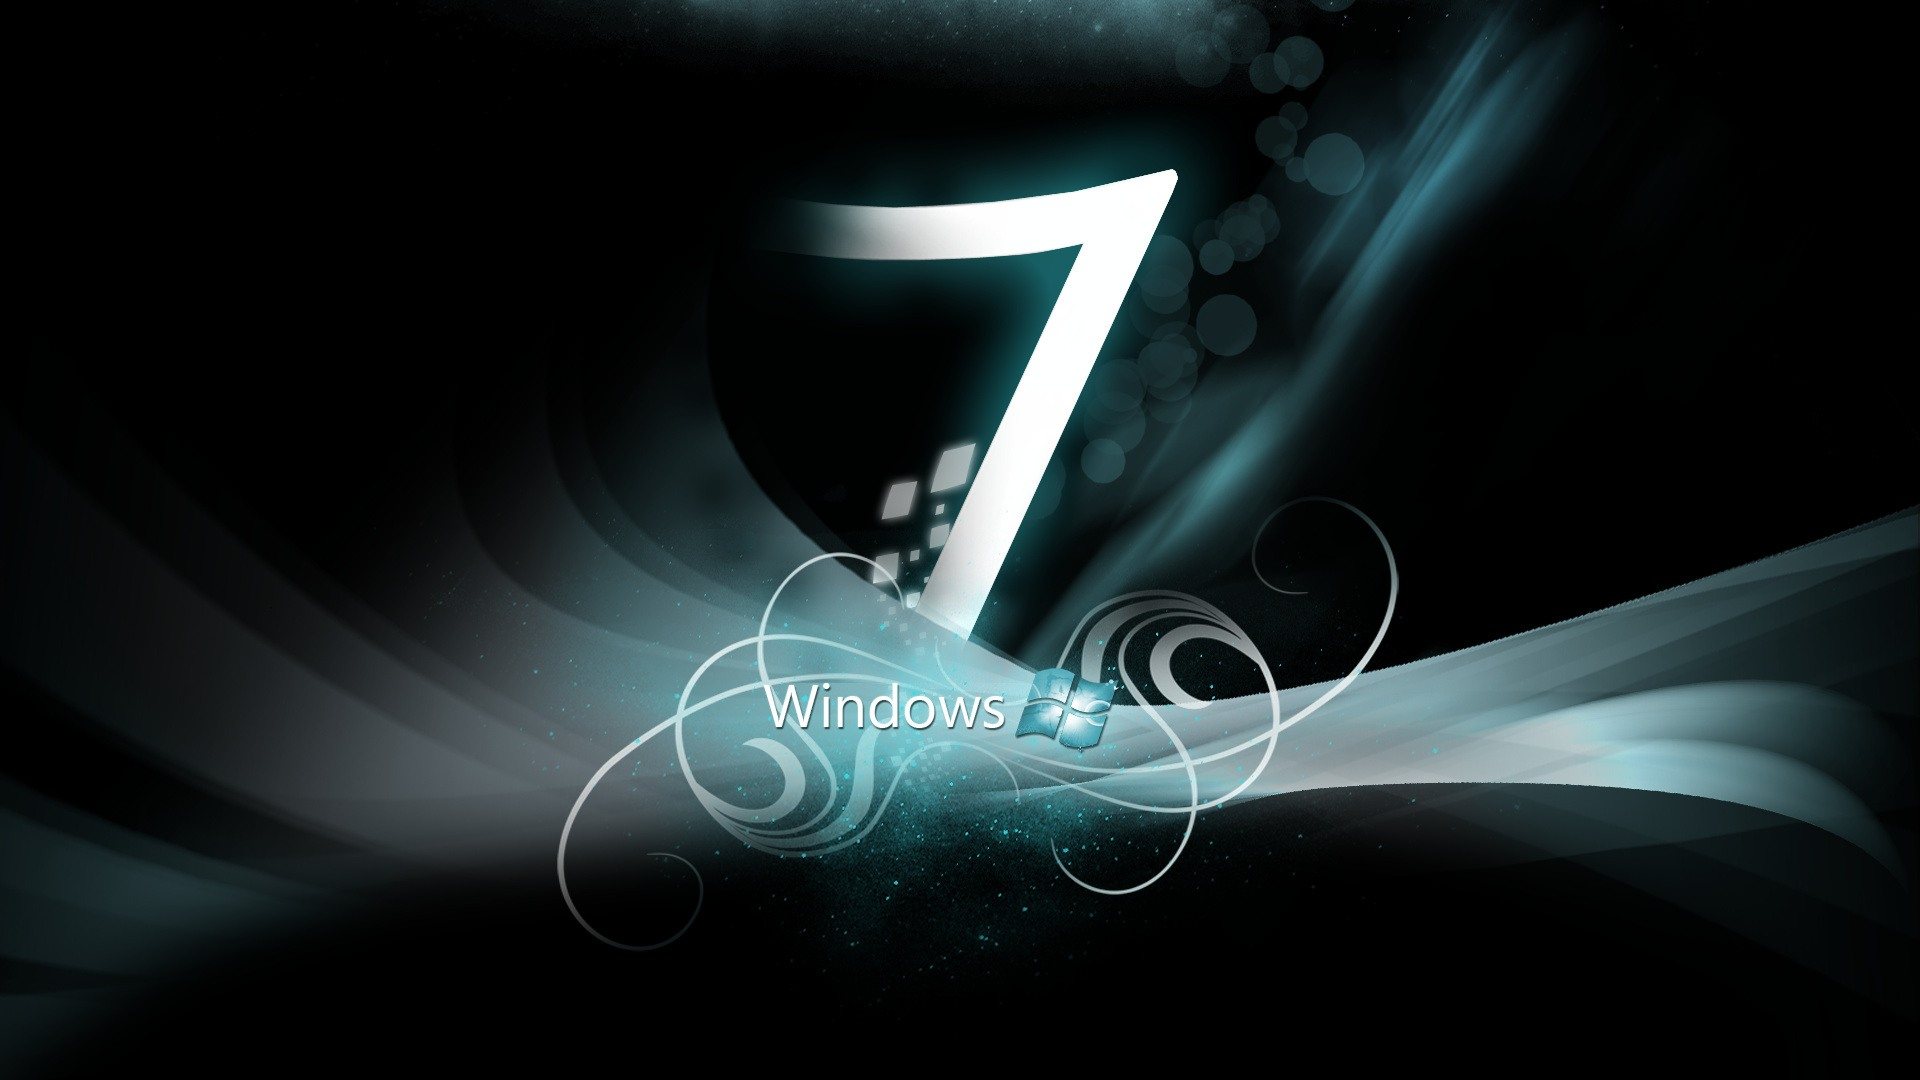 beautifu super windows 7 background | Desktop Backgrounds for Free ...